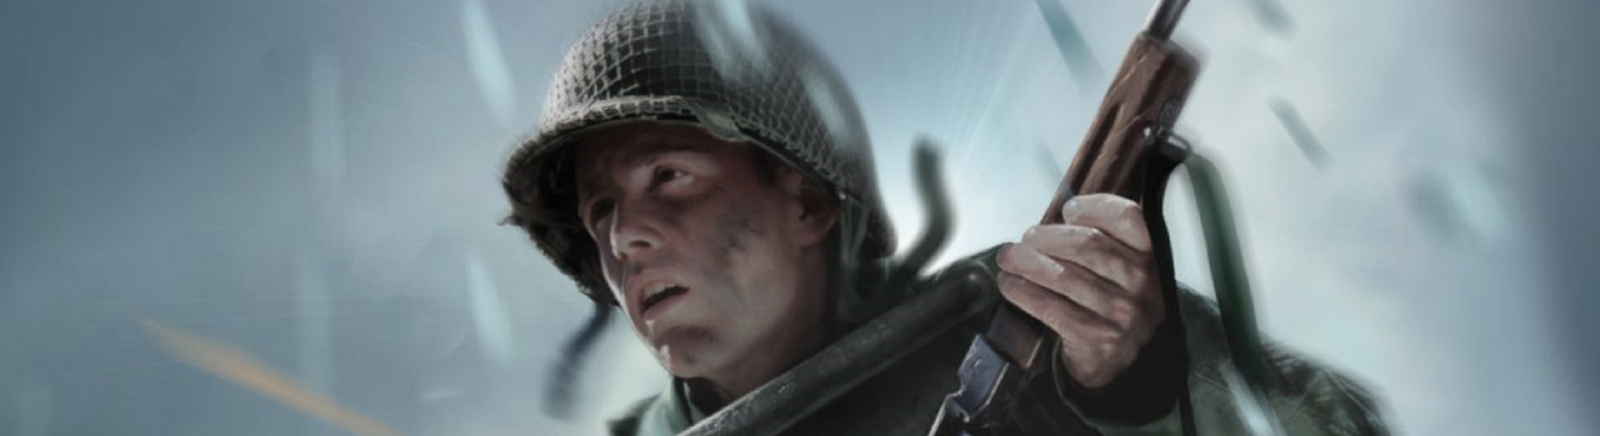 Дата выхода Medal of Honor: Frontline (MOHF)  на PS3, PS2 и Xbox в России и во всем мире